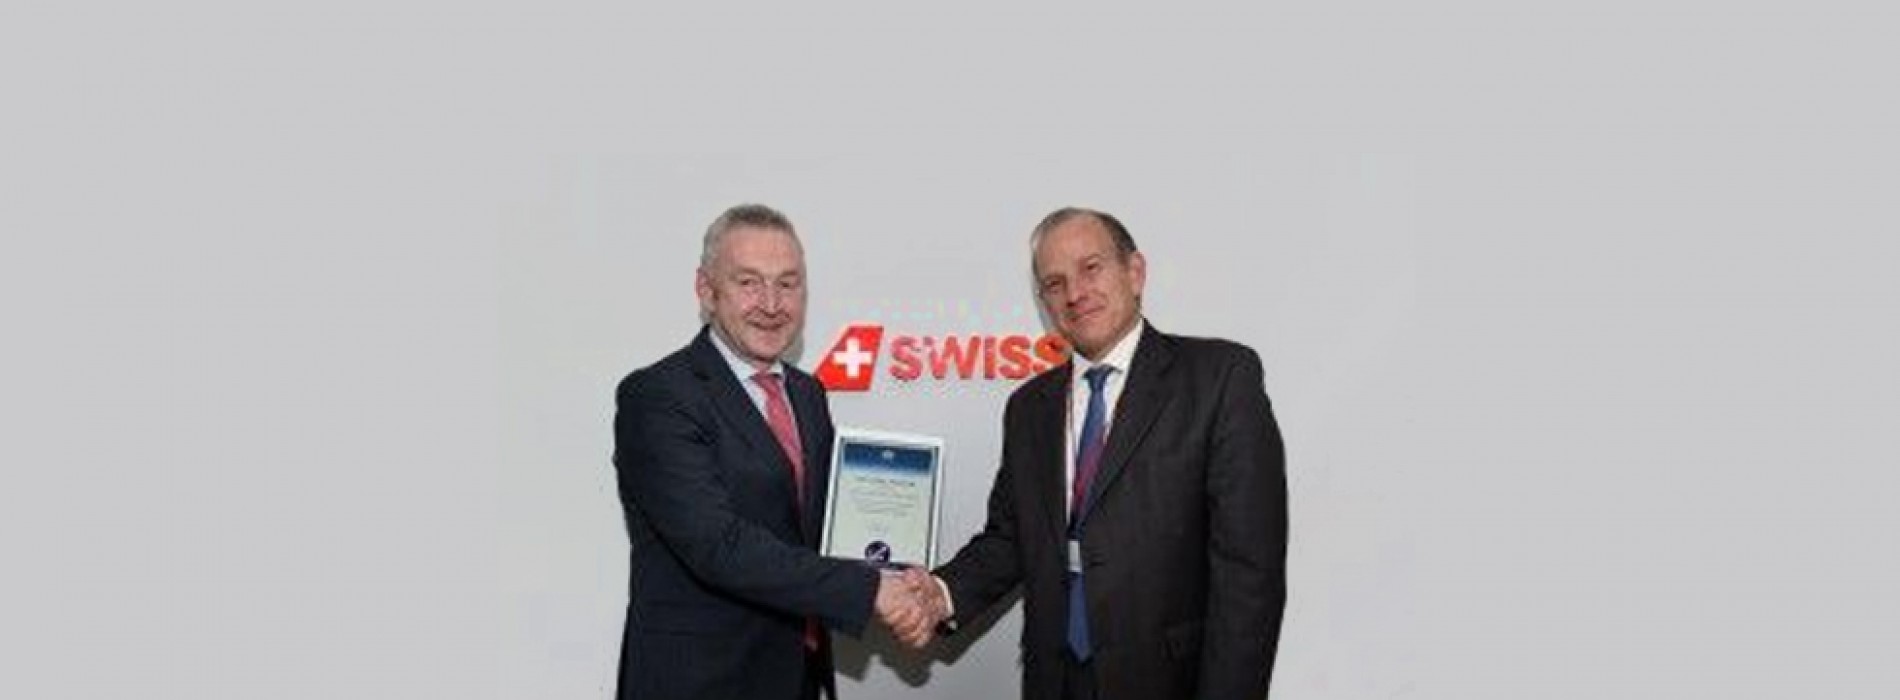 SWISS earns IATA Fast Travel Platinum Award for its self-service facilities